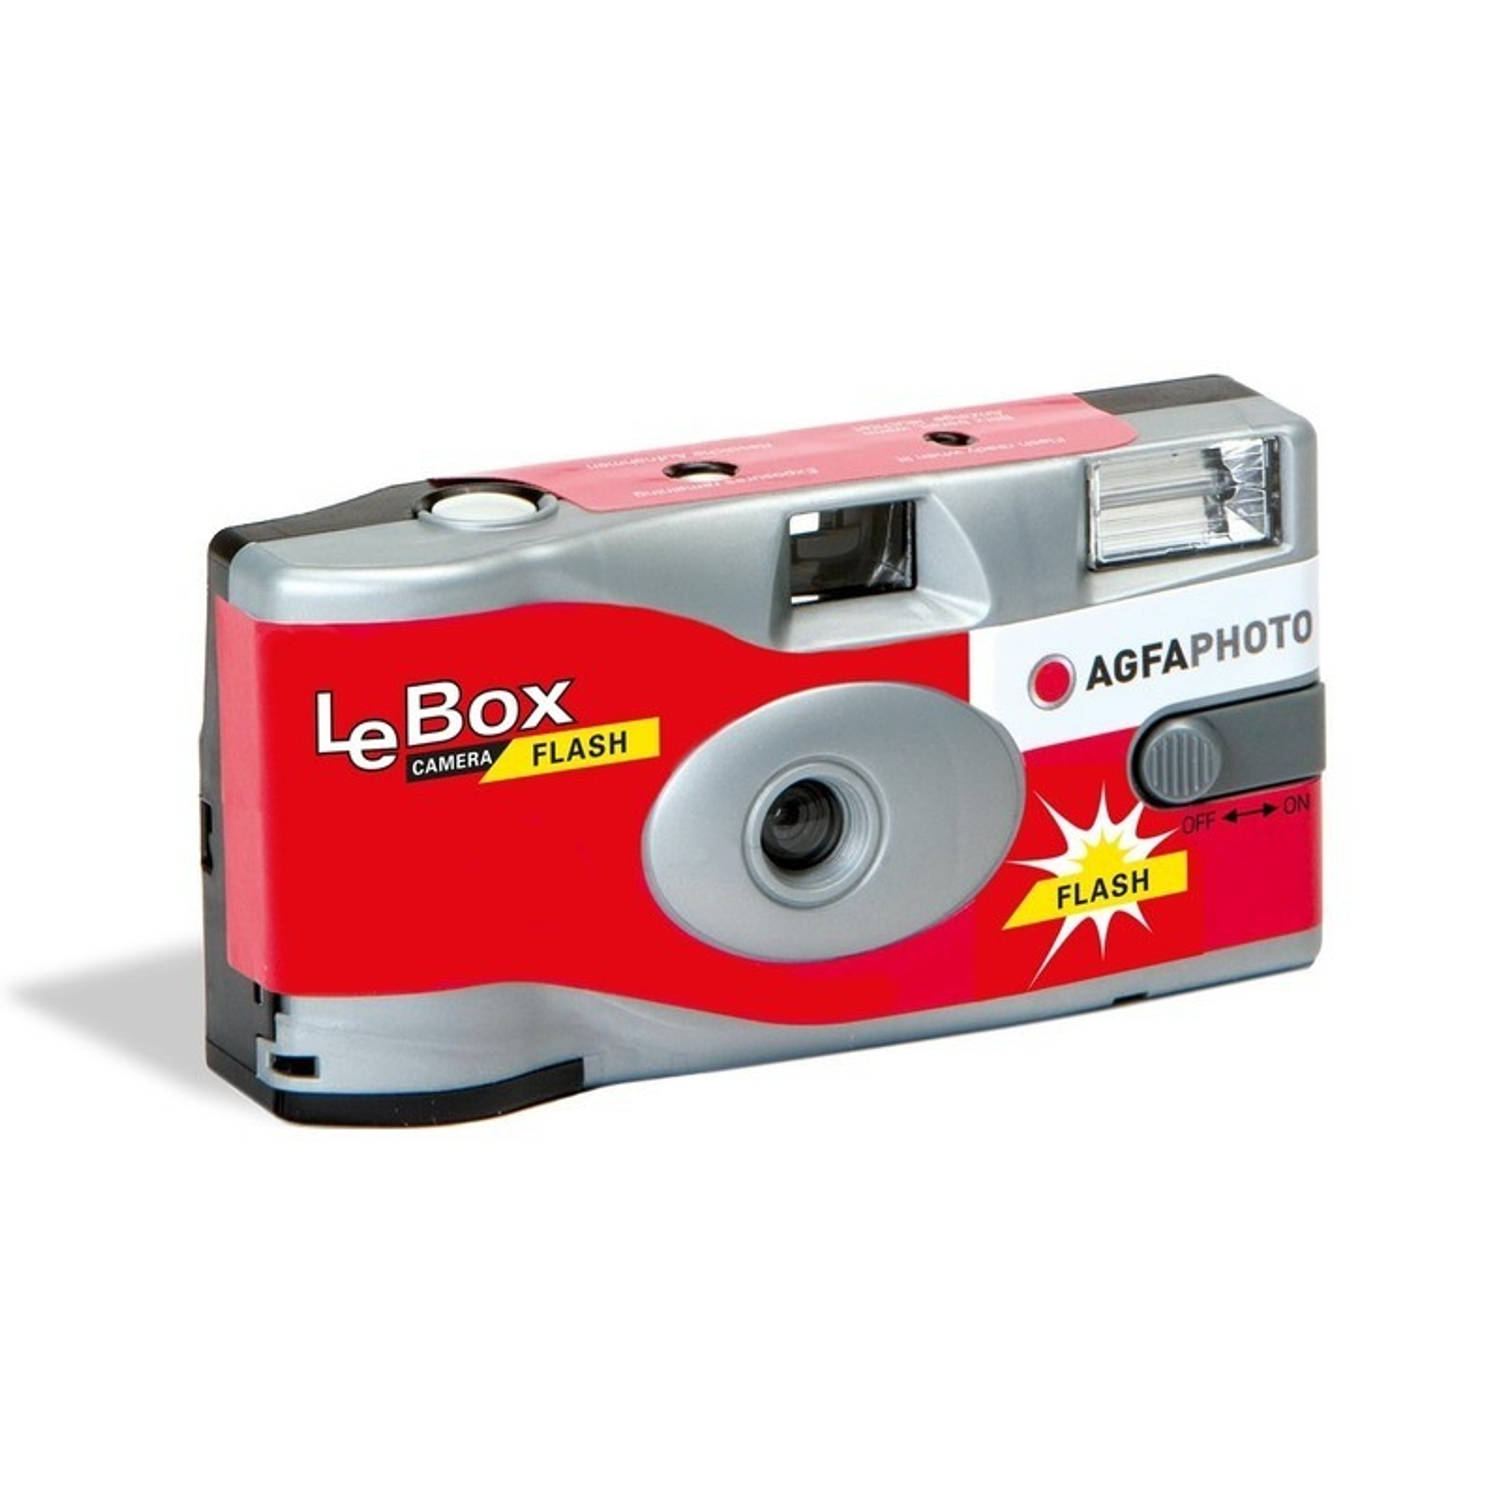 2x Bruiloft-vrijgezellenfeest wegwerp camera 27 kleuren fotos met flits Weggooi fototoestel-cameras